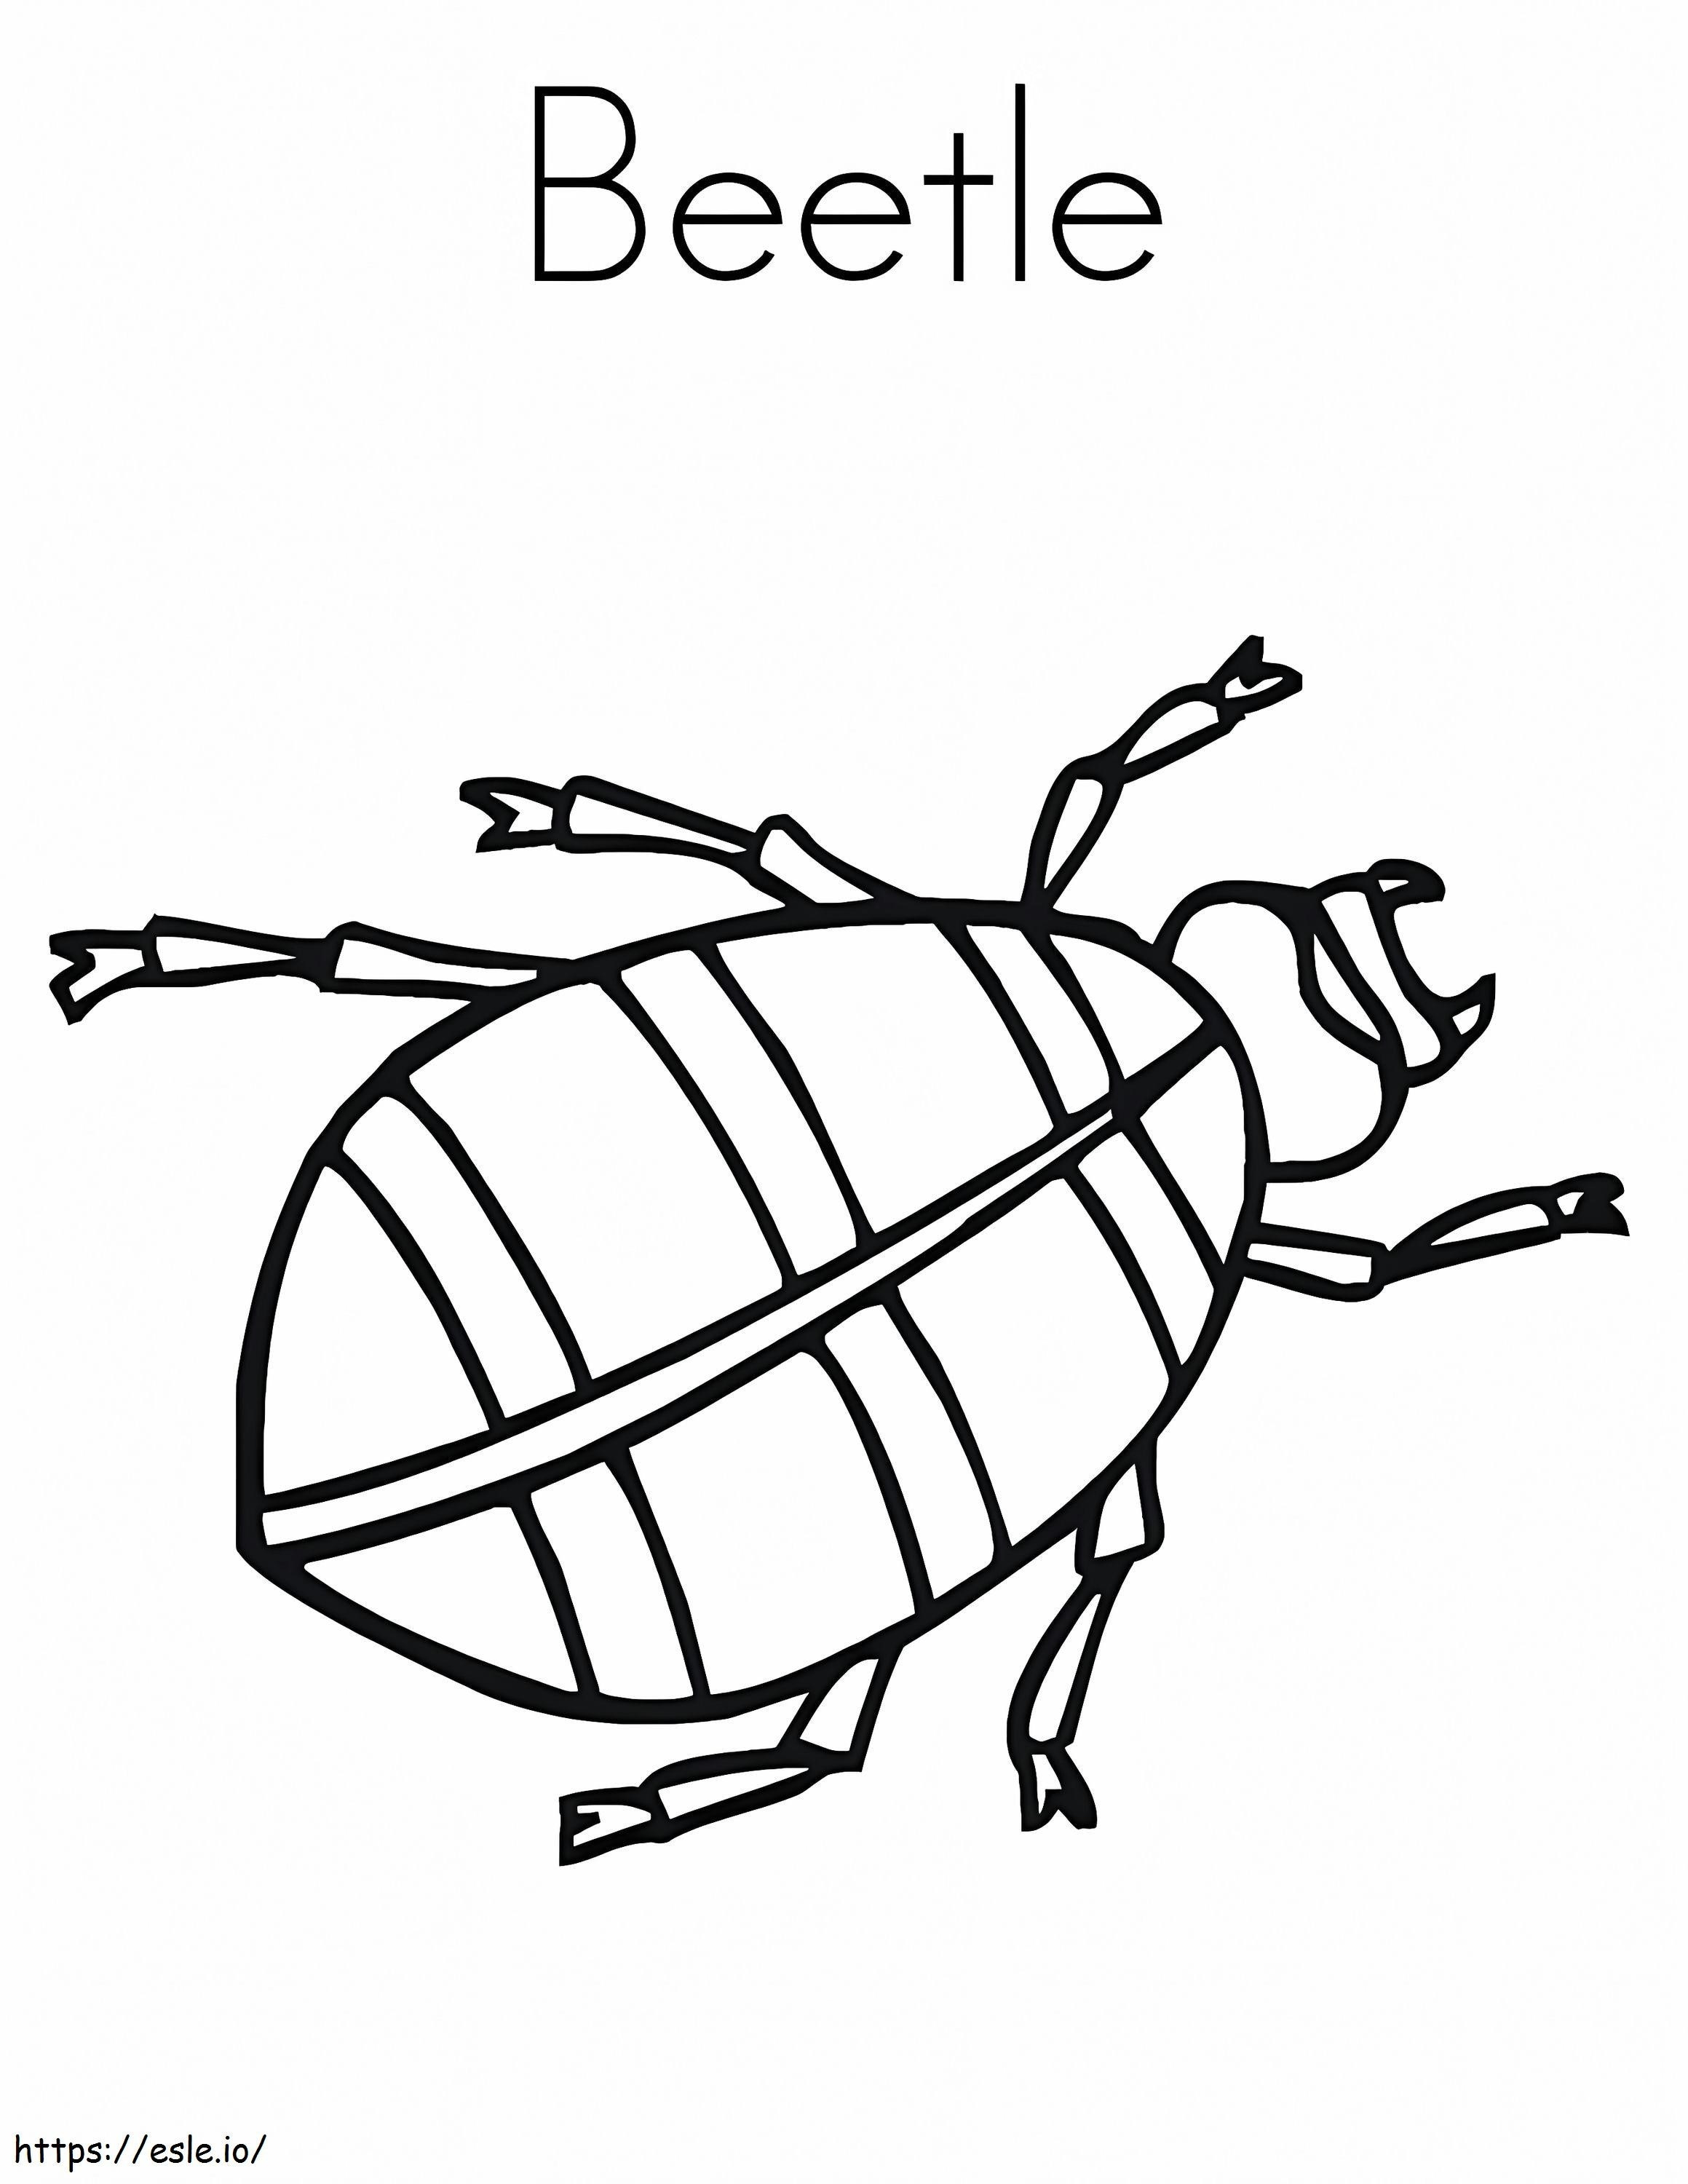 Print Beetle coloring page